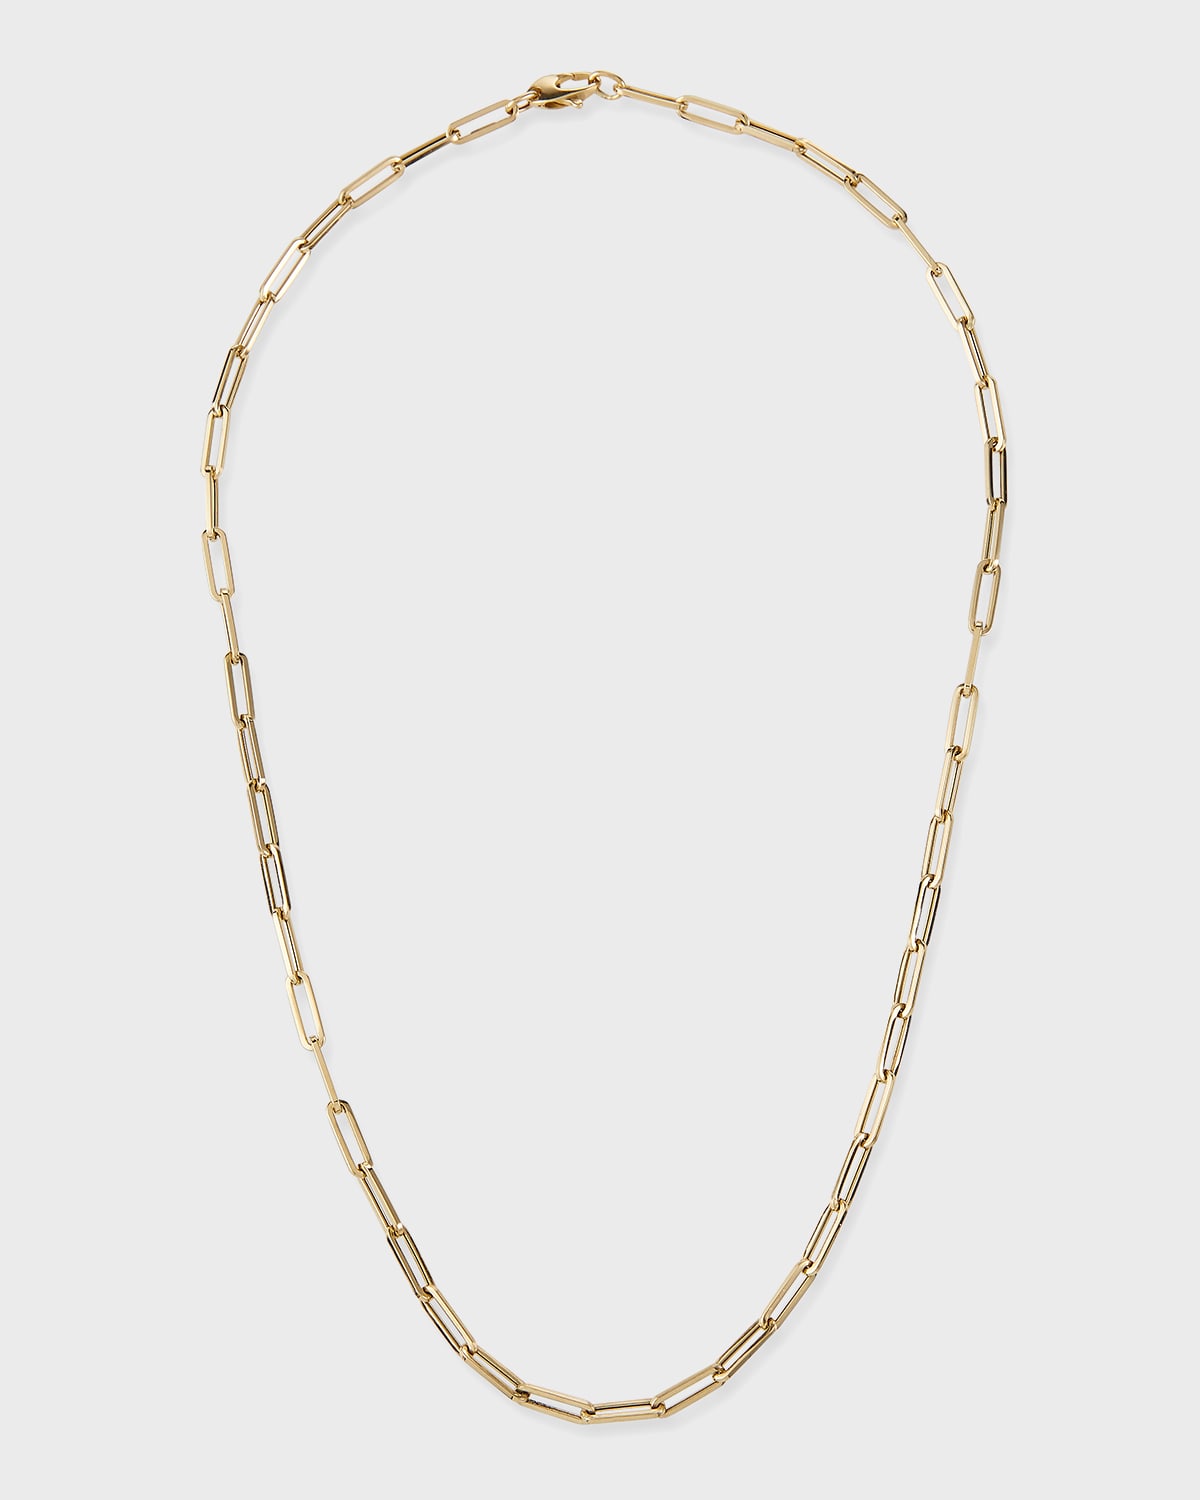 Kastel Jewelry 14k Small Link La Seta Necklace, 20"L